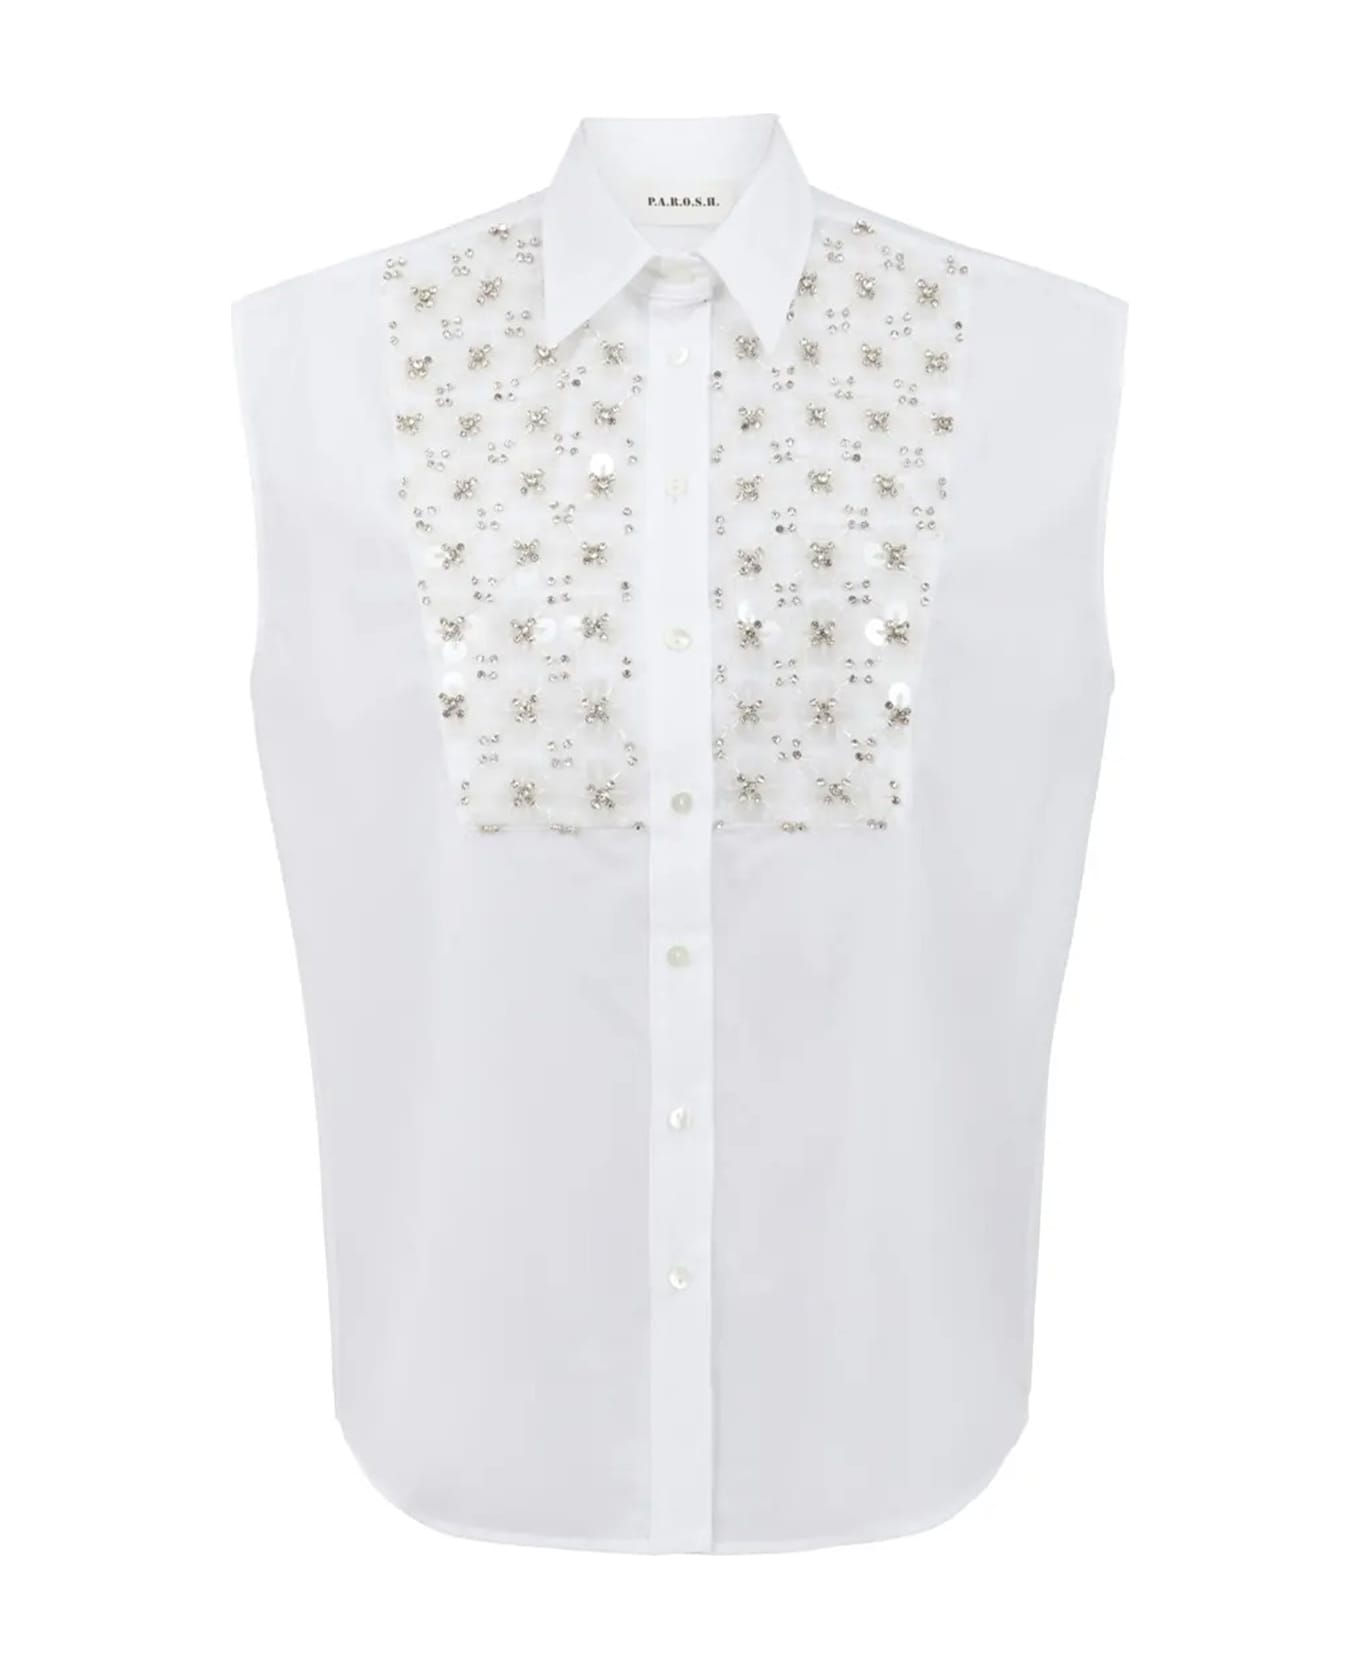 Parosh White Sleeveless Shirt - BIANCO シャツ